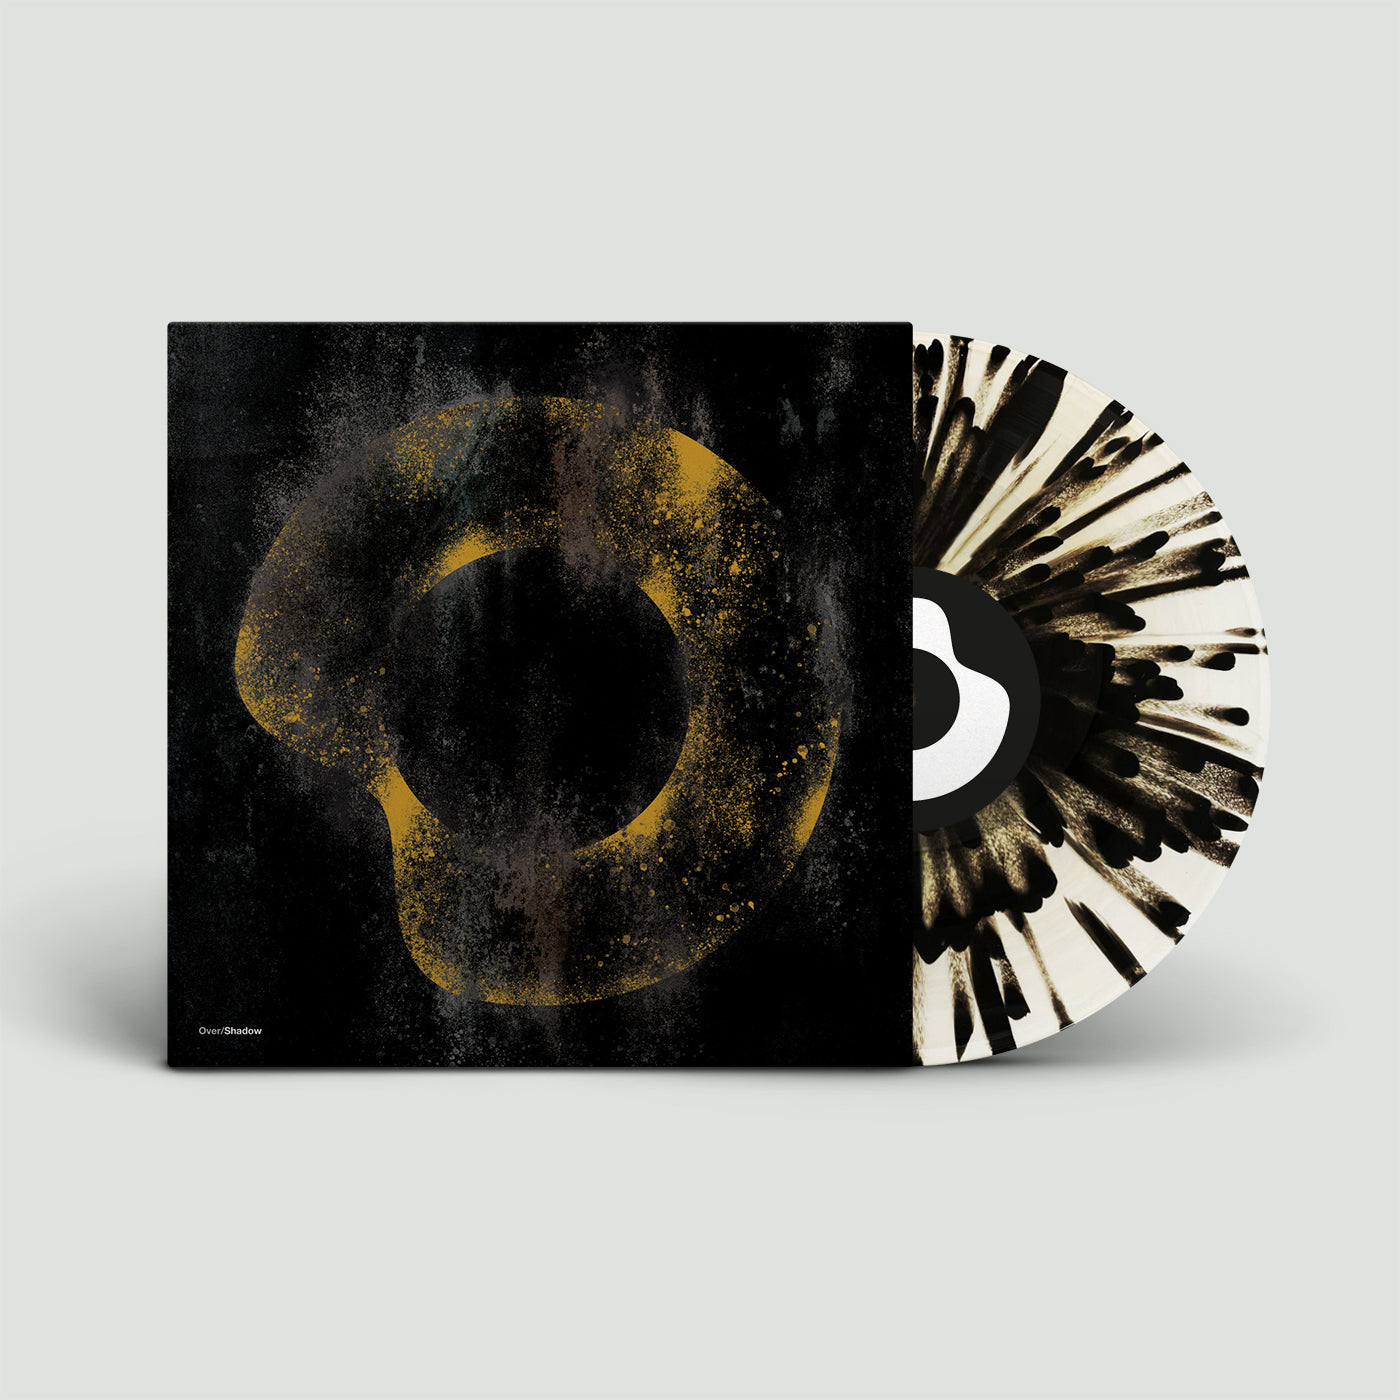 Mixrace - Myosphere / Stillness - Collectors Edition 12" Vinyl